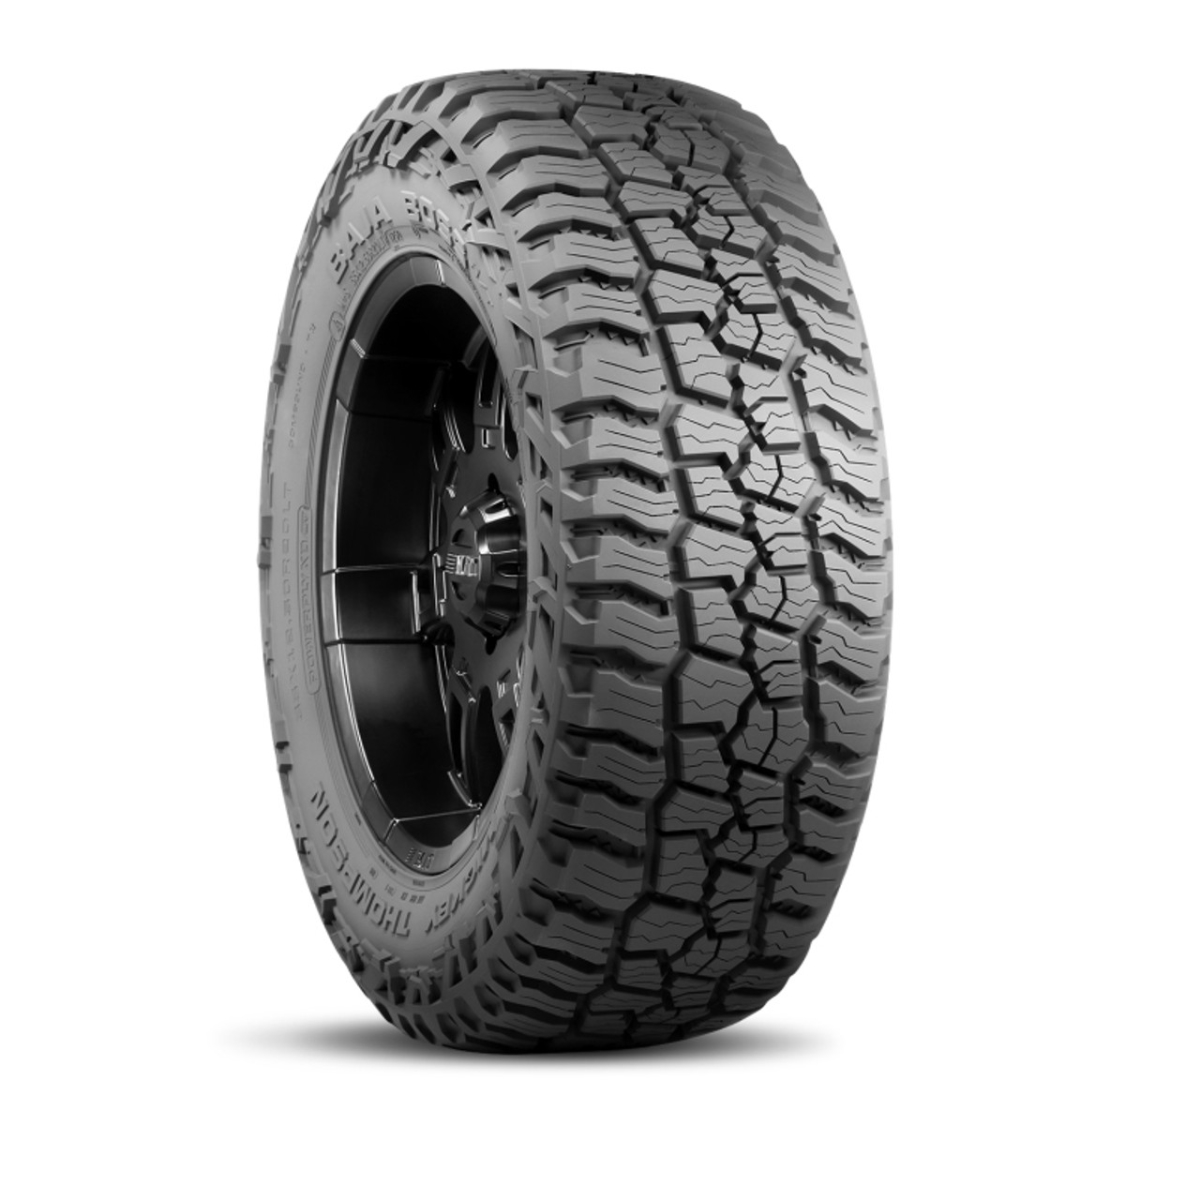 Picture of Mickey Thompson 36830 LT295-70R18 129-126Q Baja Boss Asymmetric Tread Tire